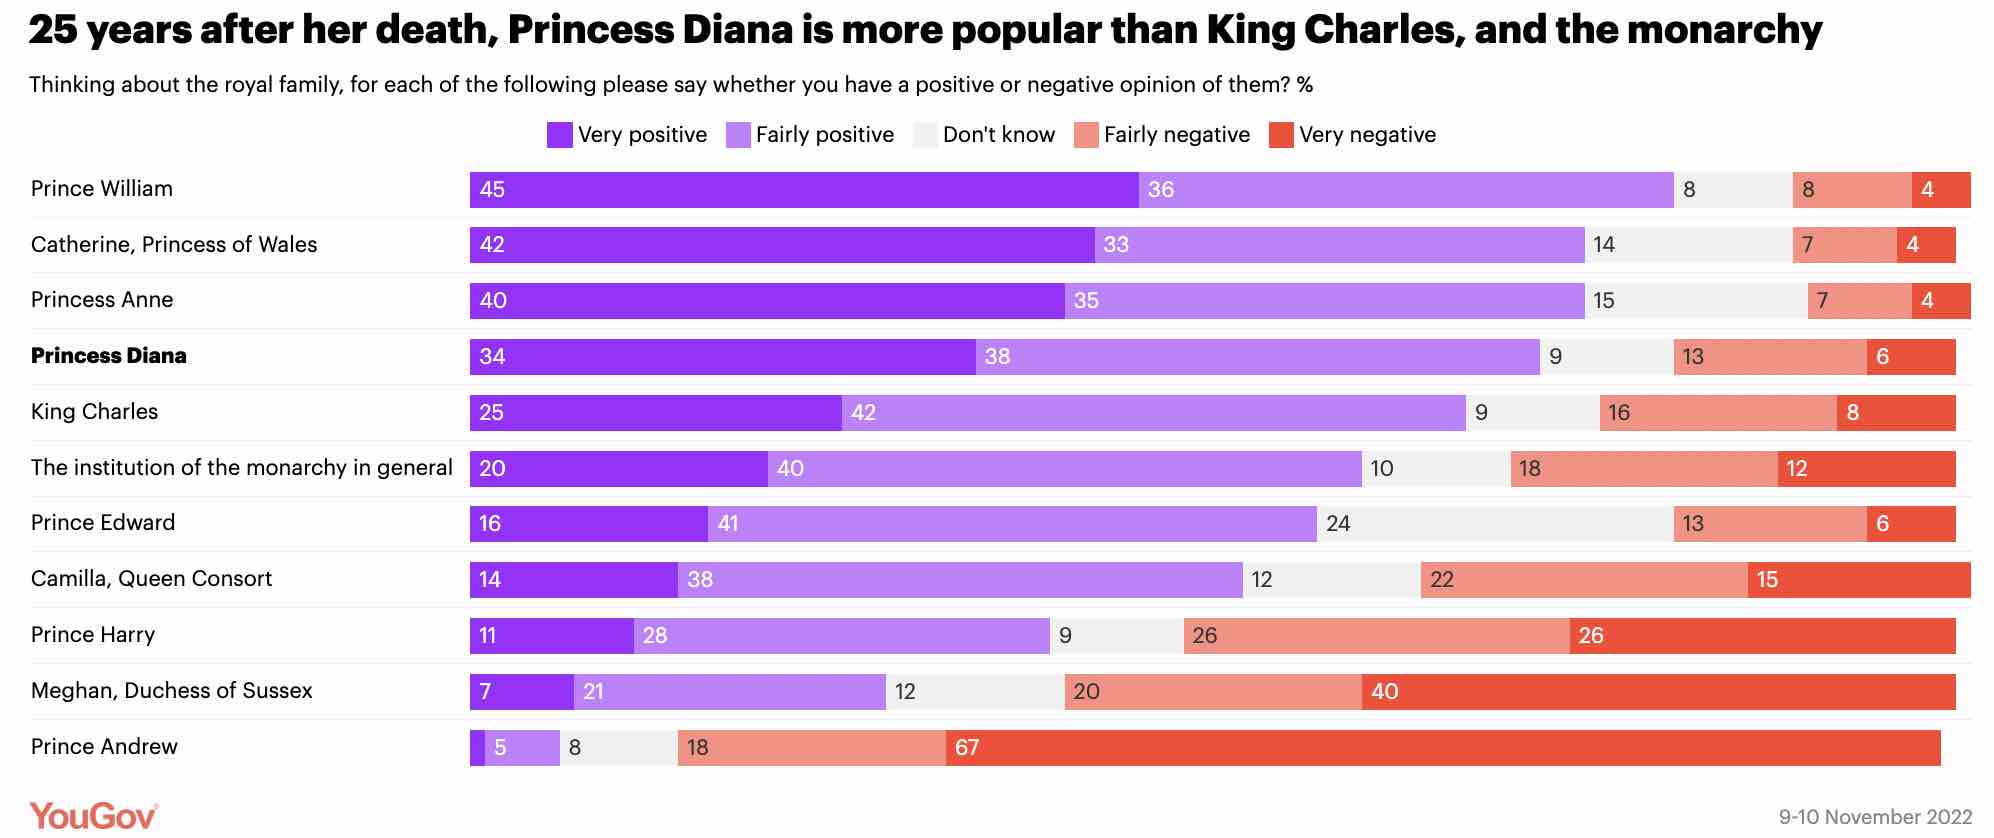 Princesa Diana Gales monarquia britânica rei Charles pesquisa